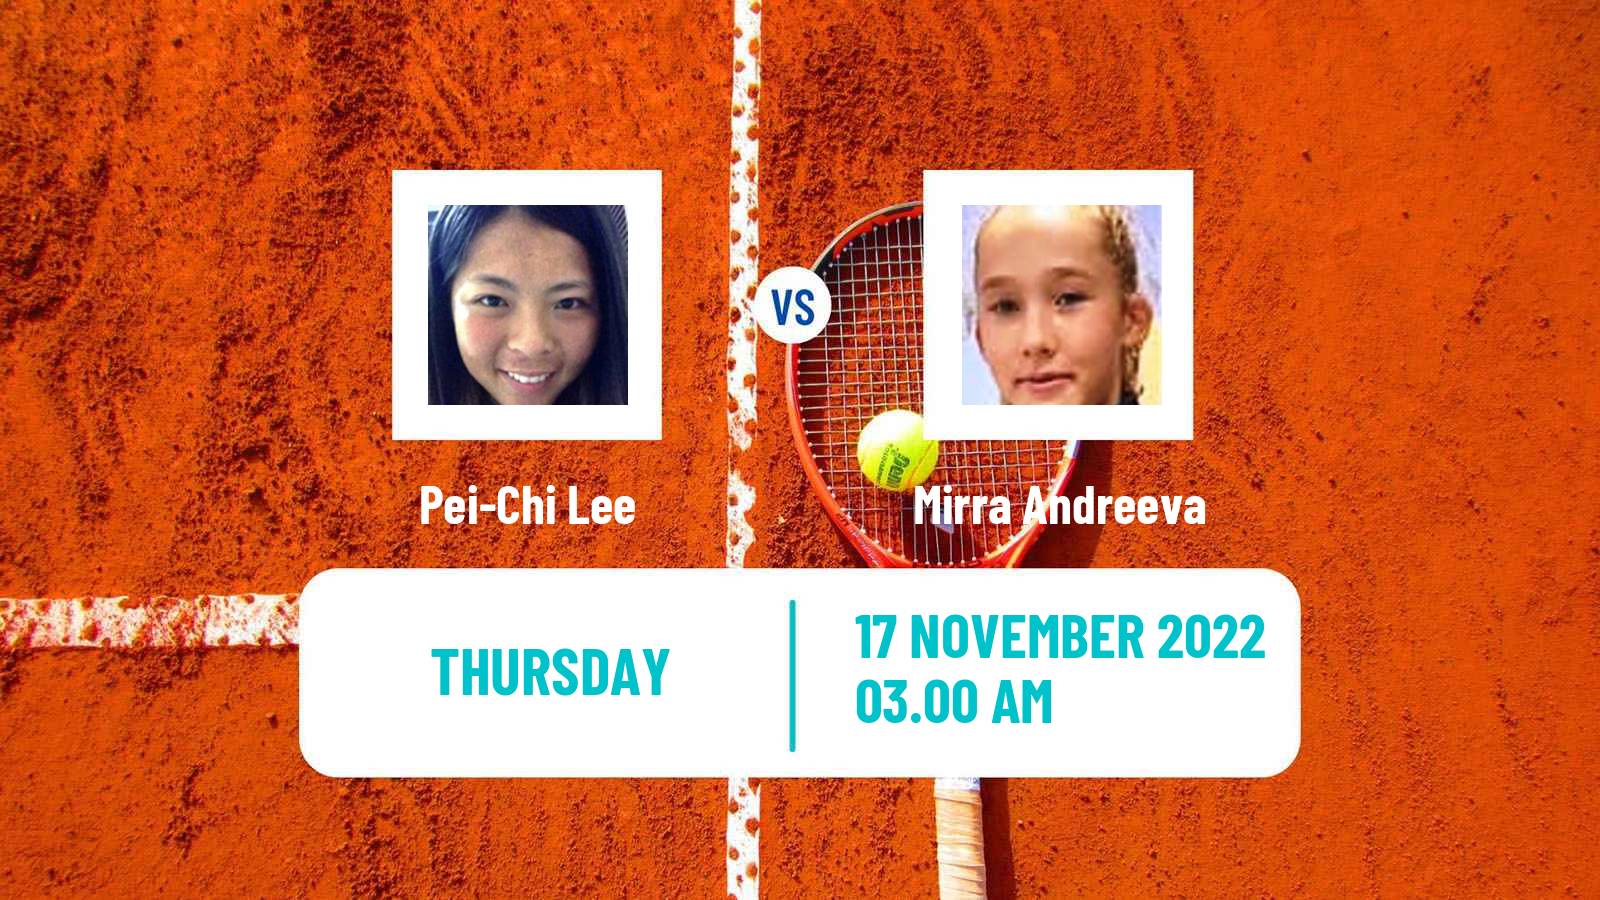 Tennis ITF Tournaments Pei-Chi Lee - Mirra Andreeva